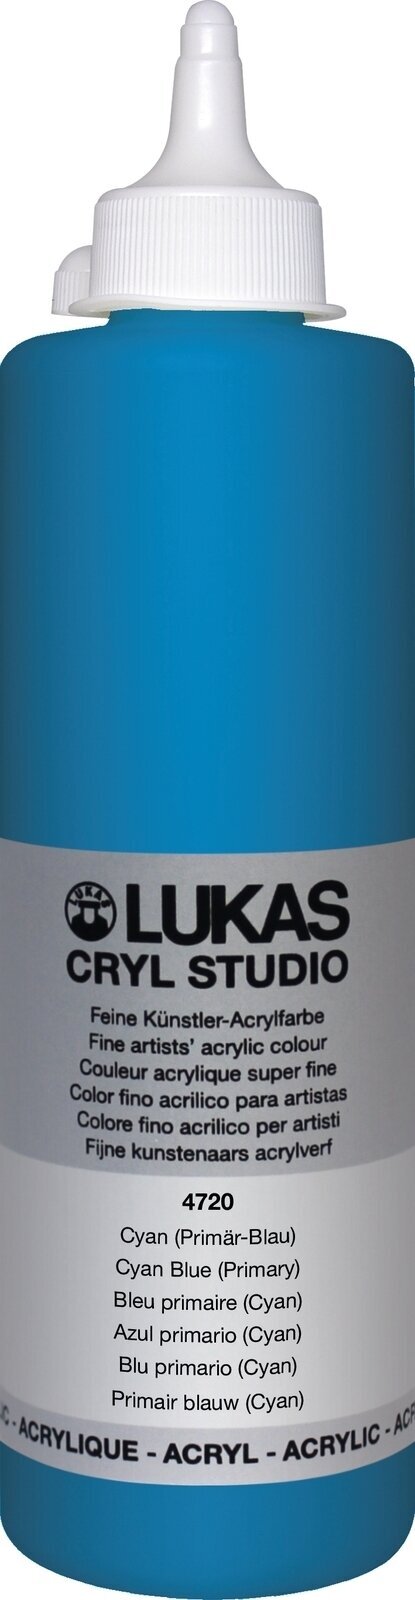 Acrylic Paint Lukas Cryl Studio Acrylic Paint Plastic Bottle Acrylic Paint Cyan Blue (Primary) 500 ml 1 pc